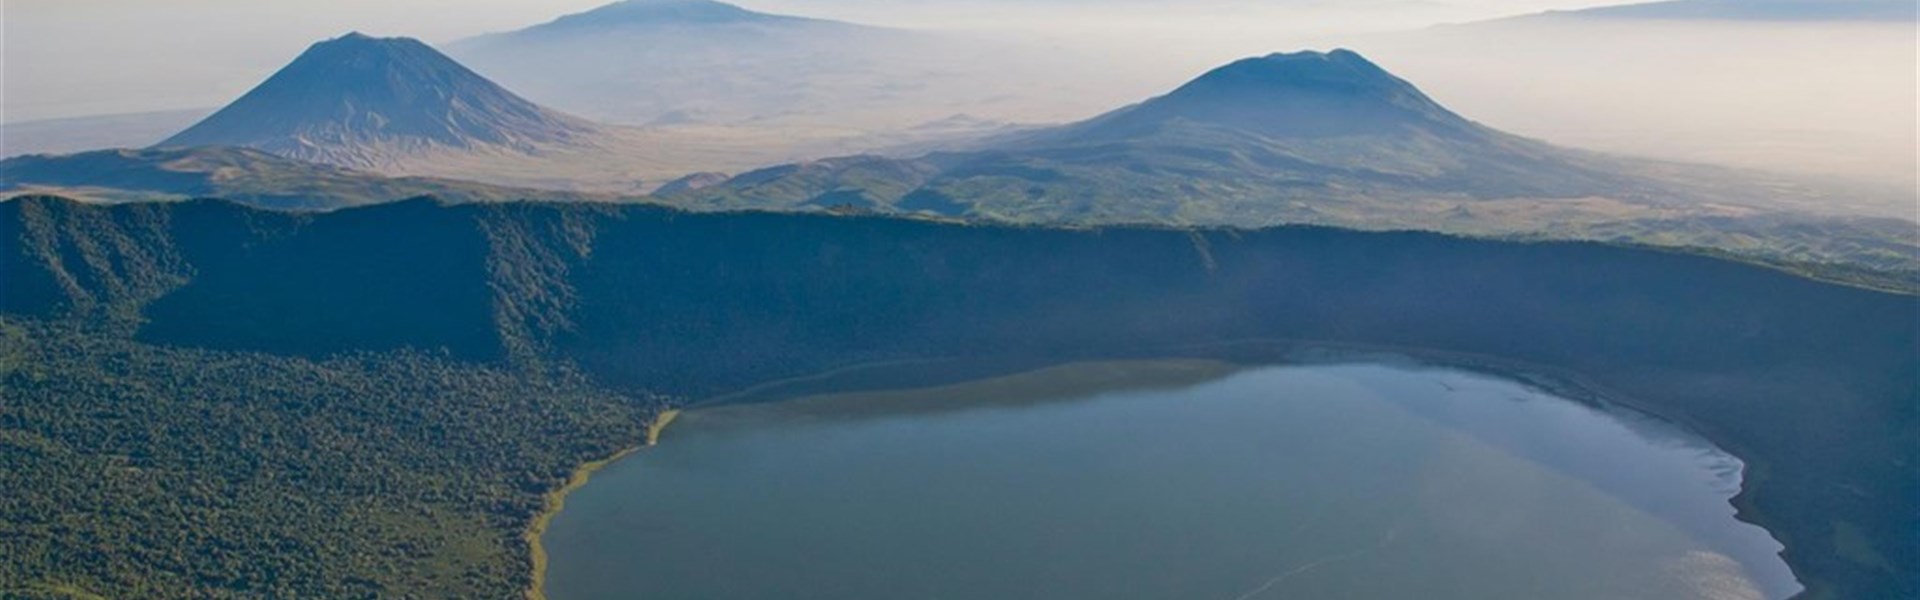 Safari v Tanzanii - To nejlepší ze severní Tanzánie s českým průvodcem - Kráter Ngorongoro - Tanzanie -safari